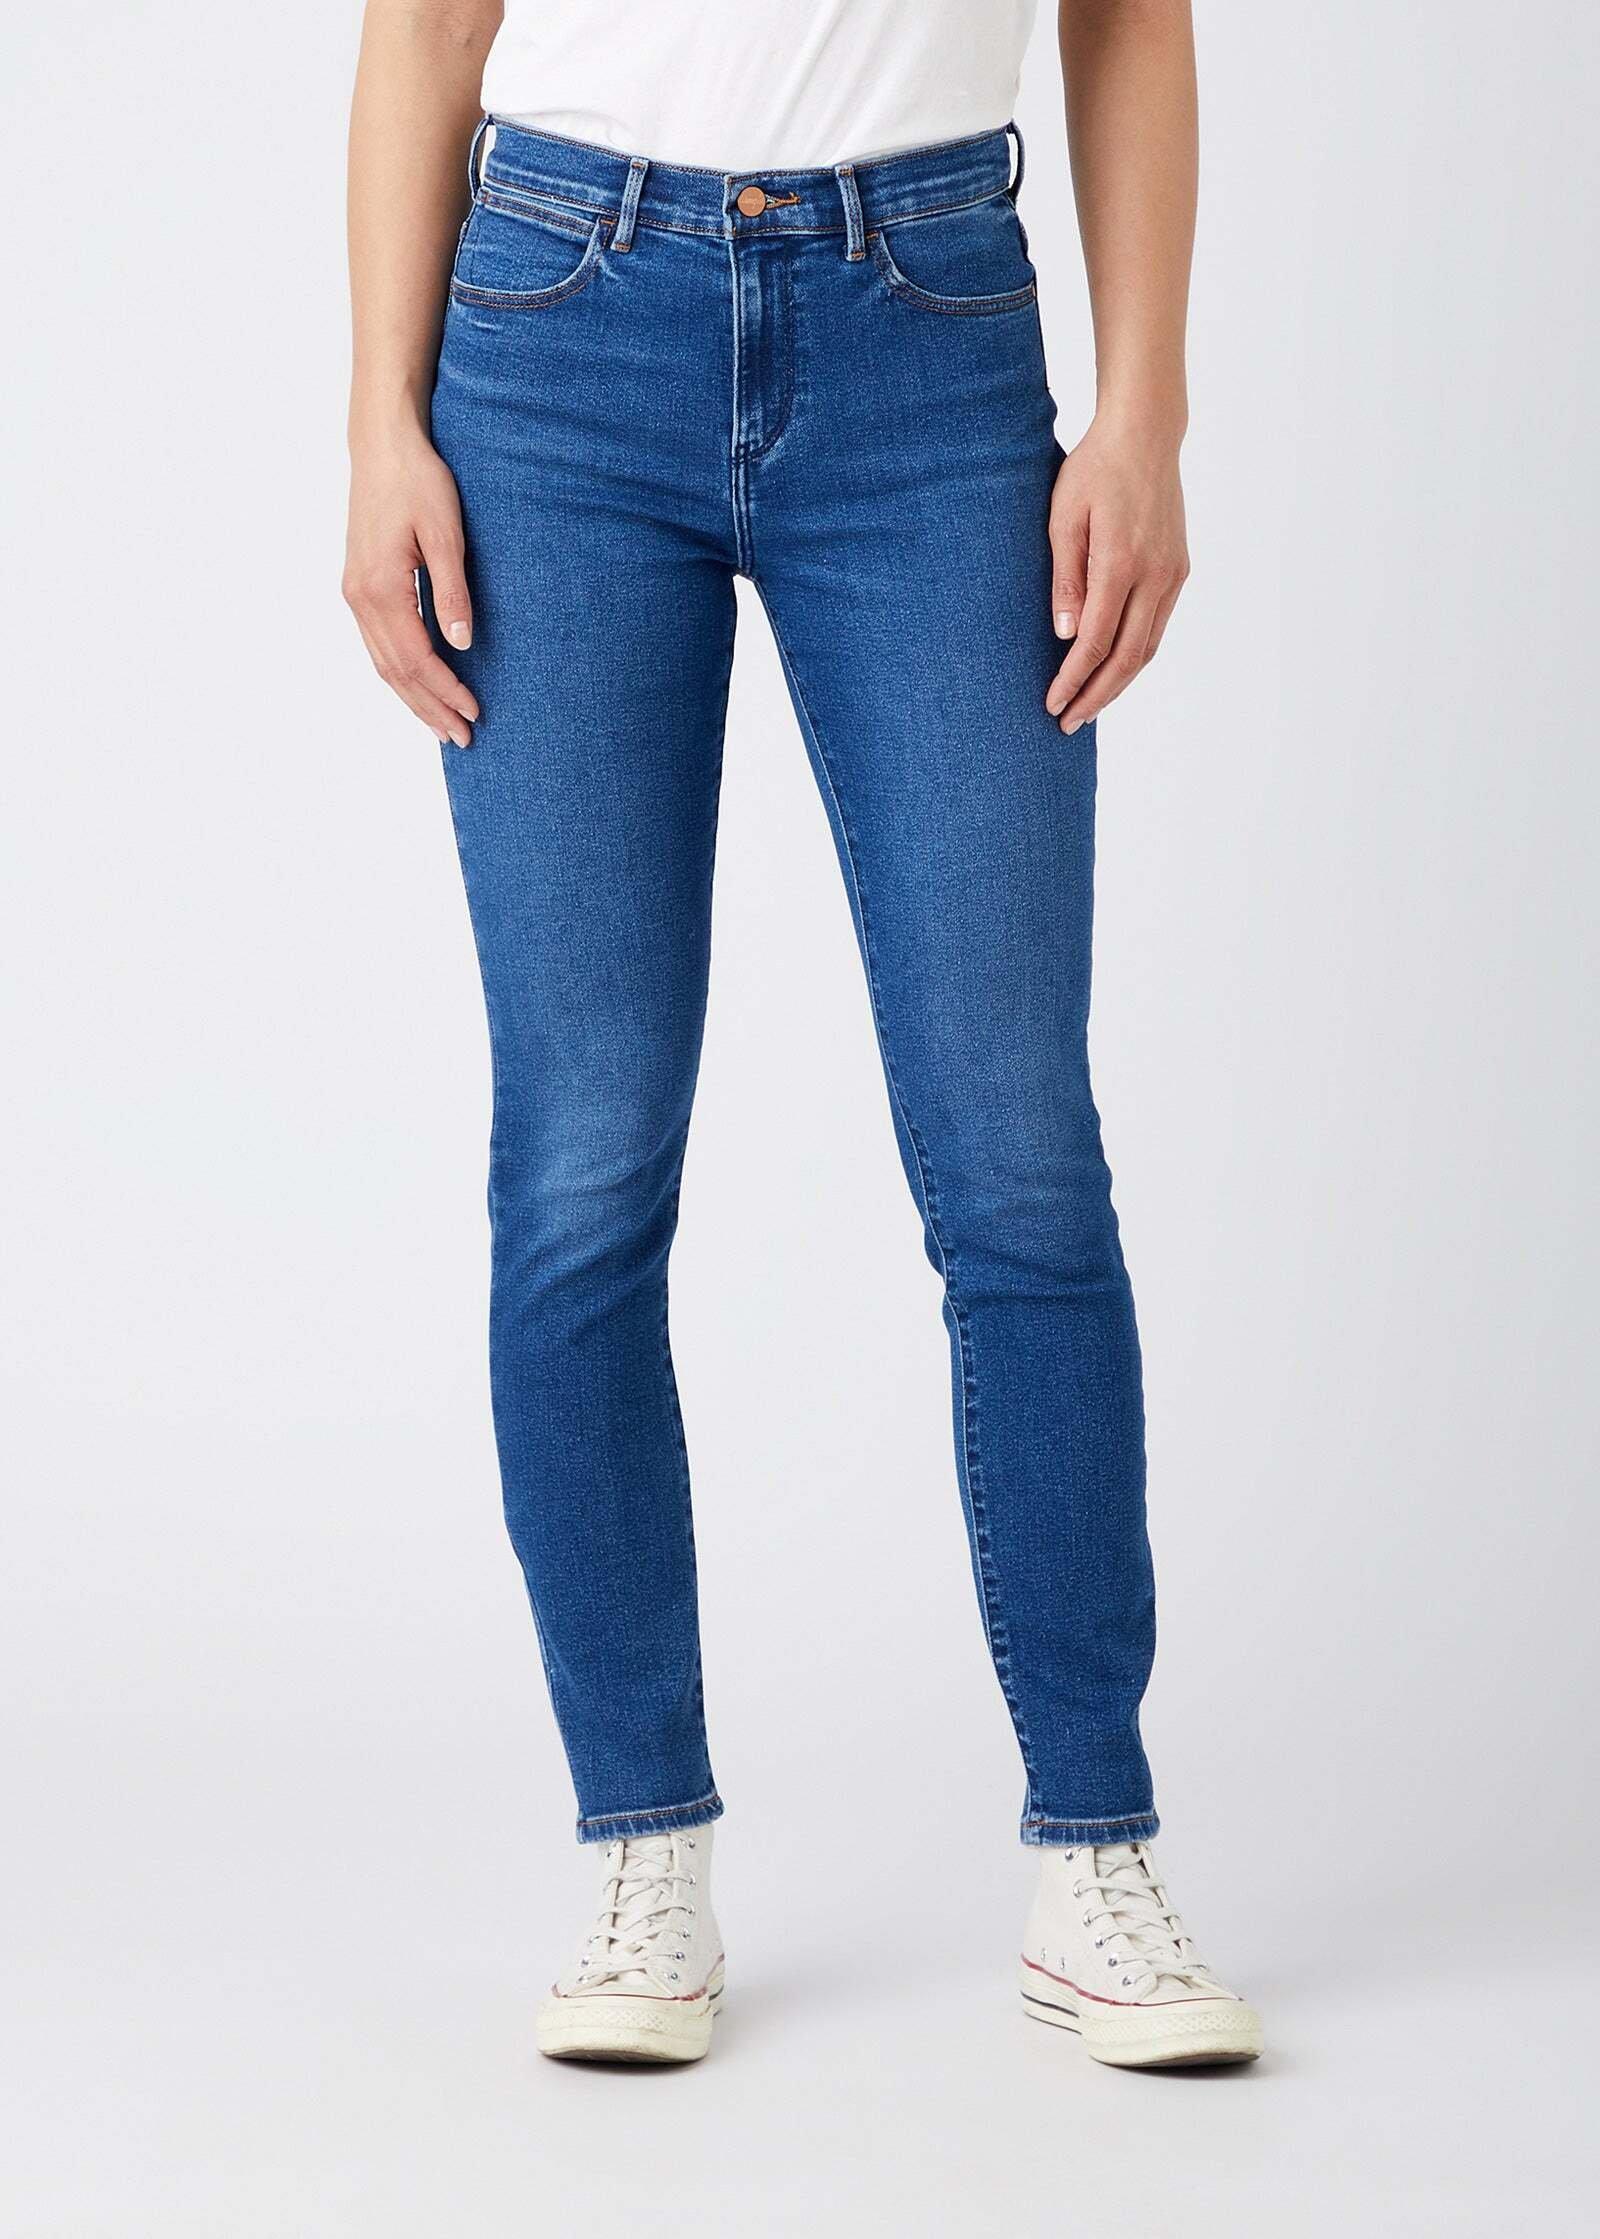 Jeans Skinny Fit High Rise Damen Blau Denim L32/W30 von Wrangler